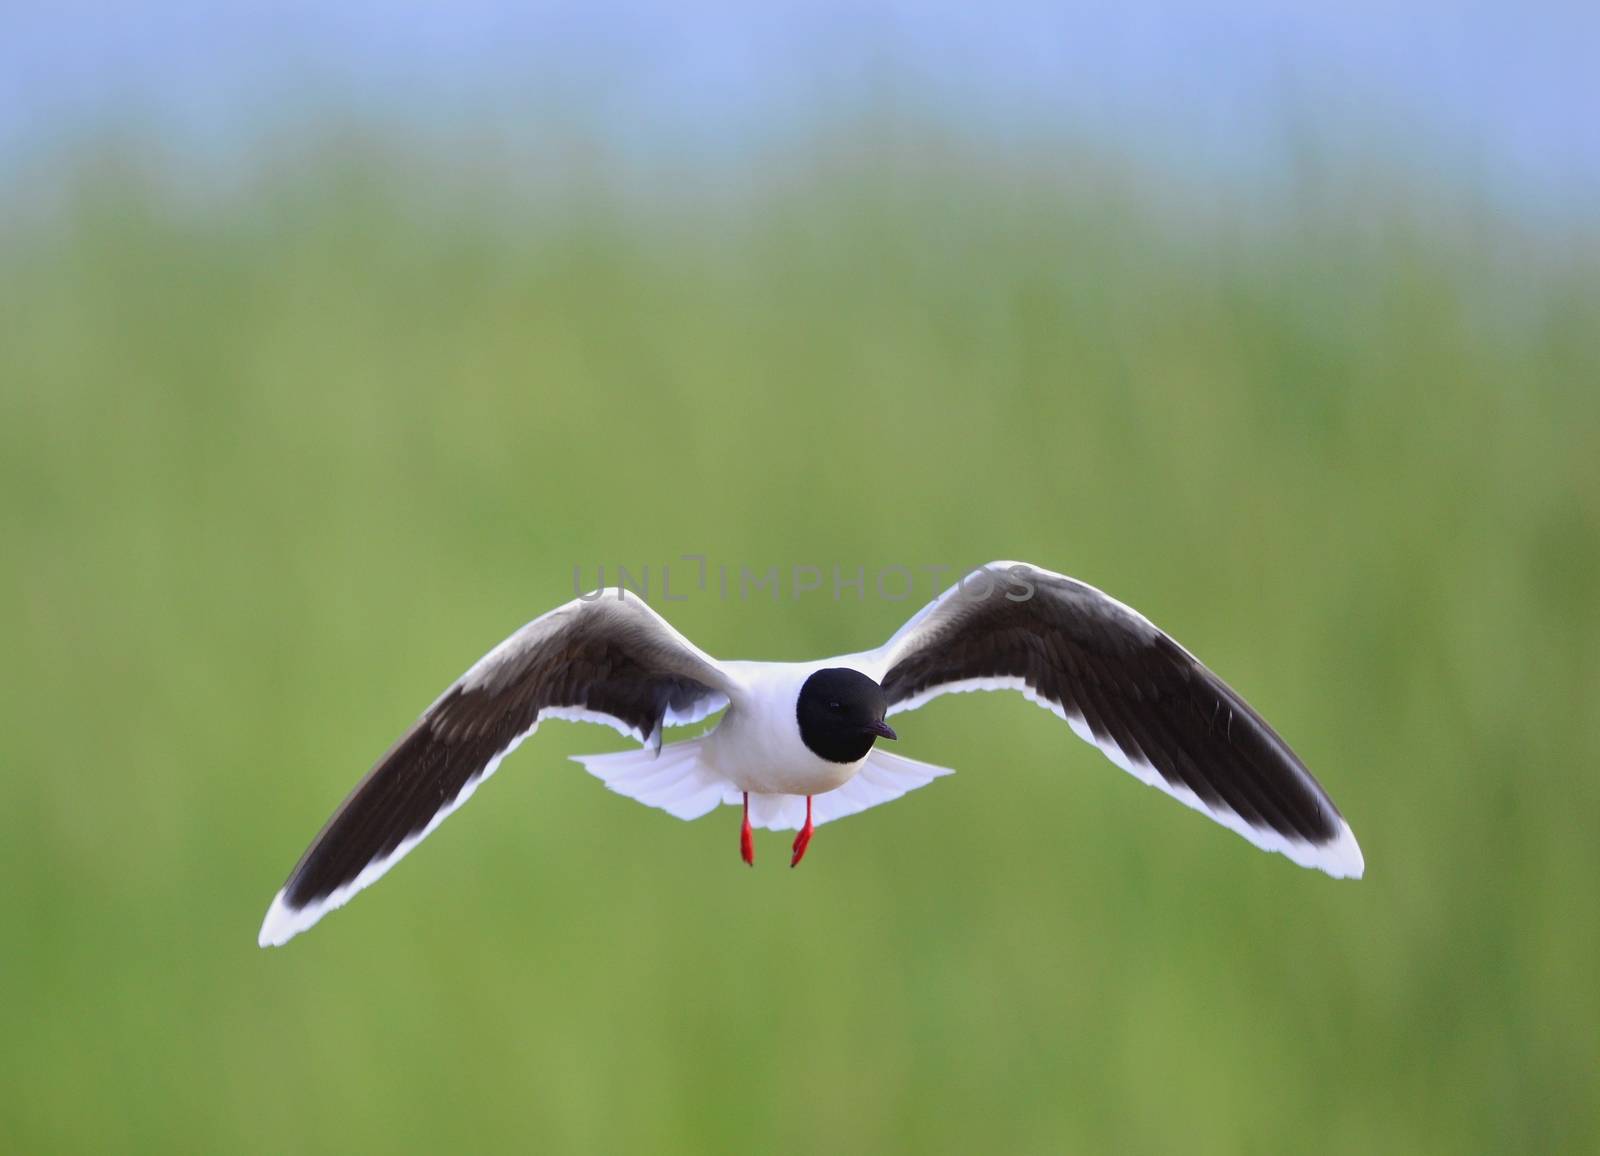 Black-headed Gull (Larus ridibundus) in flight on the green grass background. Front